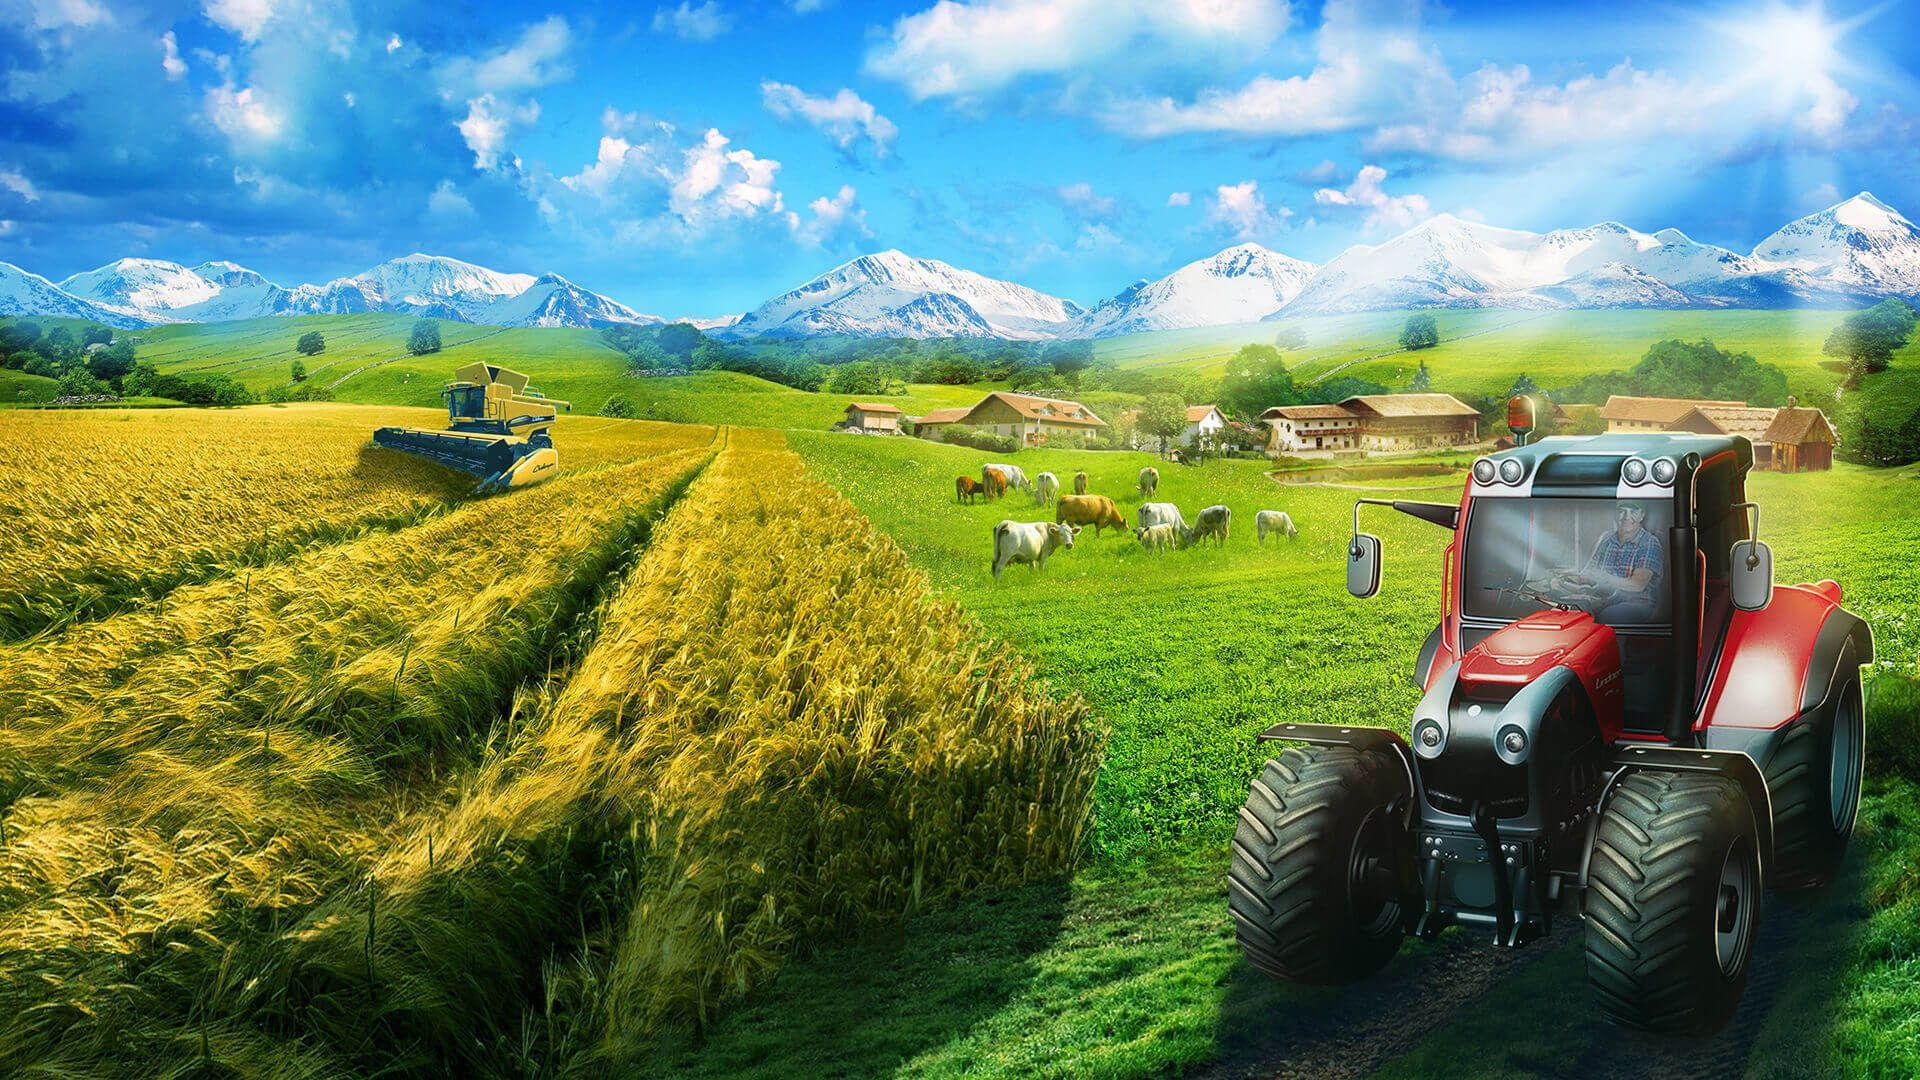 Farming Simulator Wallpapers Top Free Farming Simulator Backgrounds Wallpaperaccess 7239